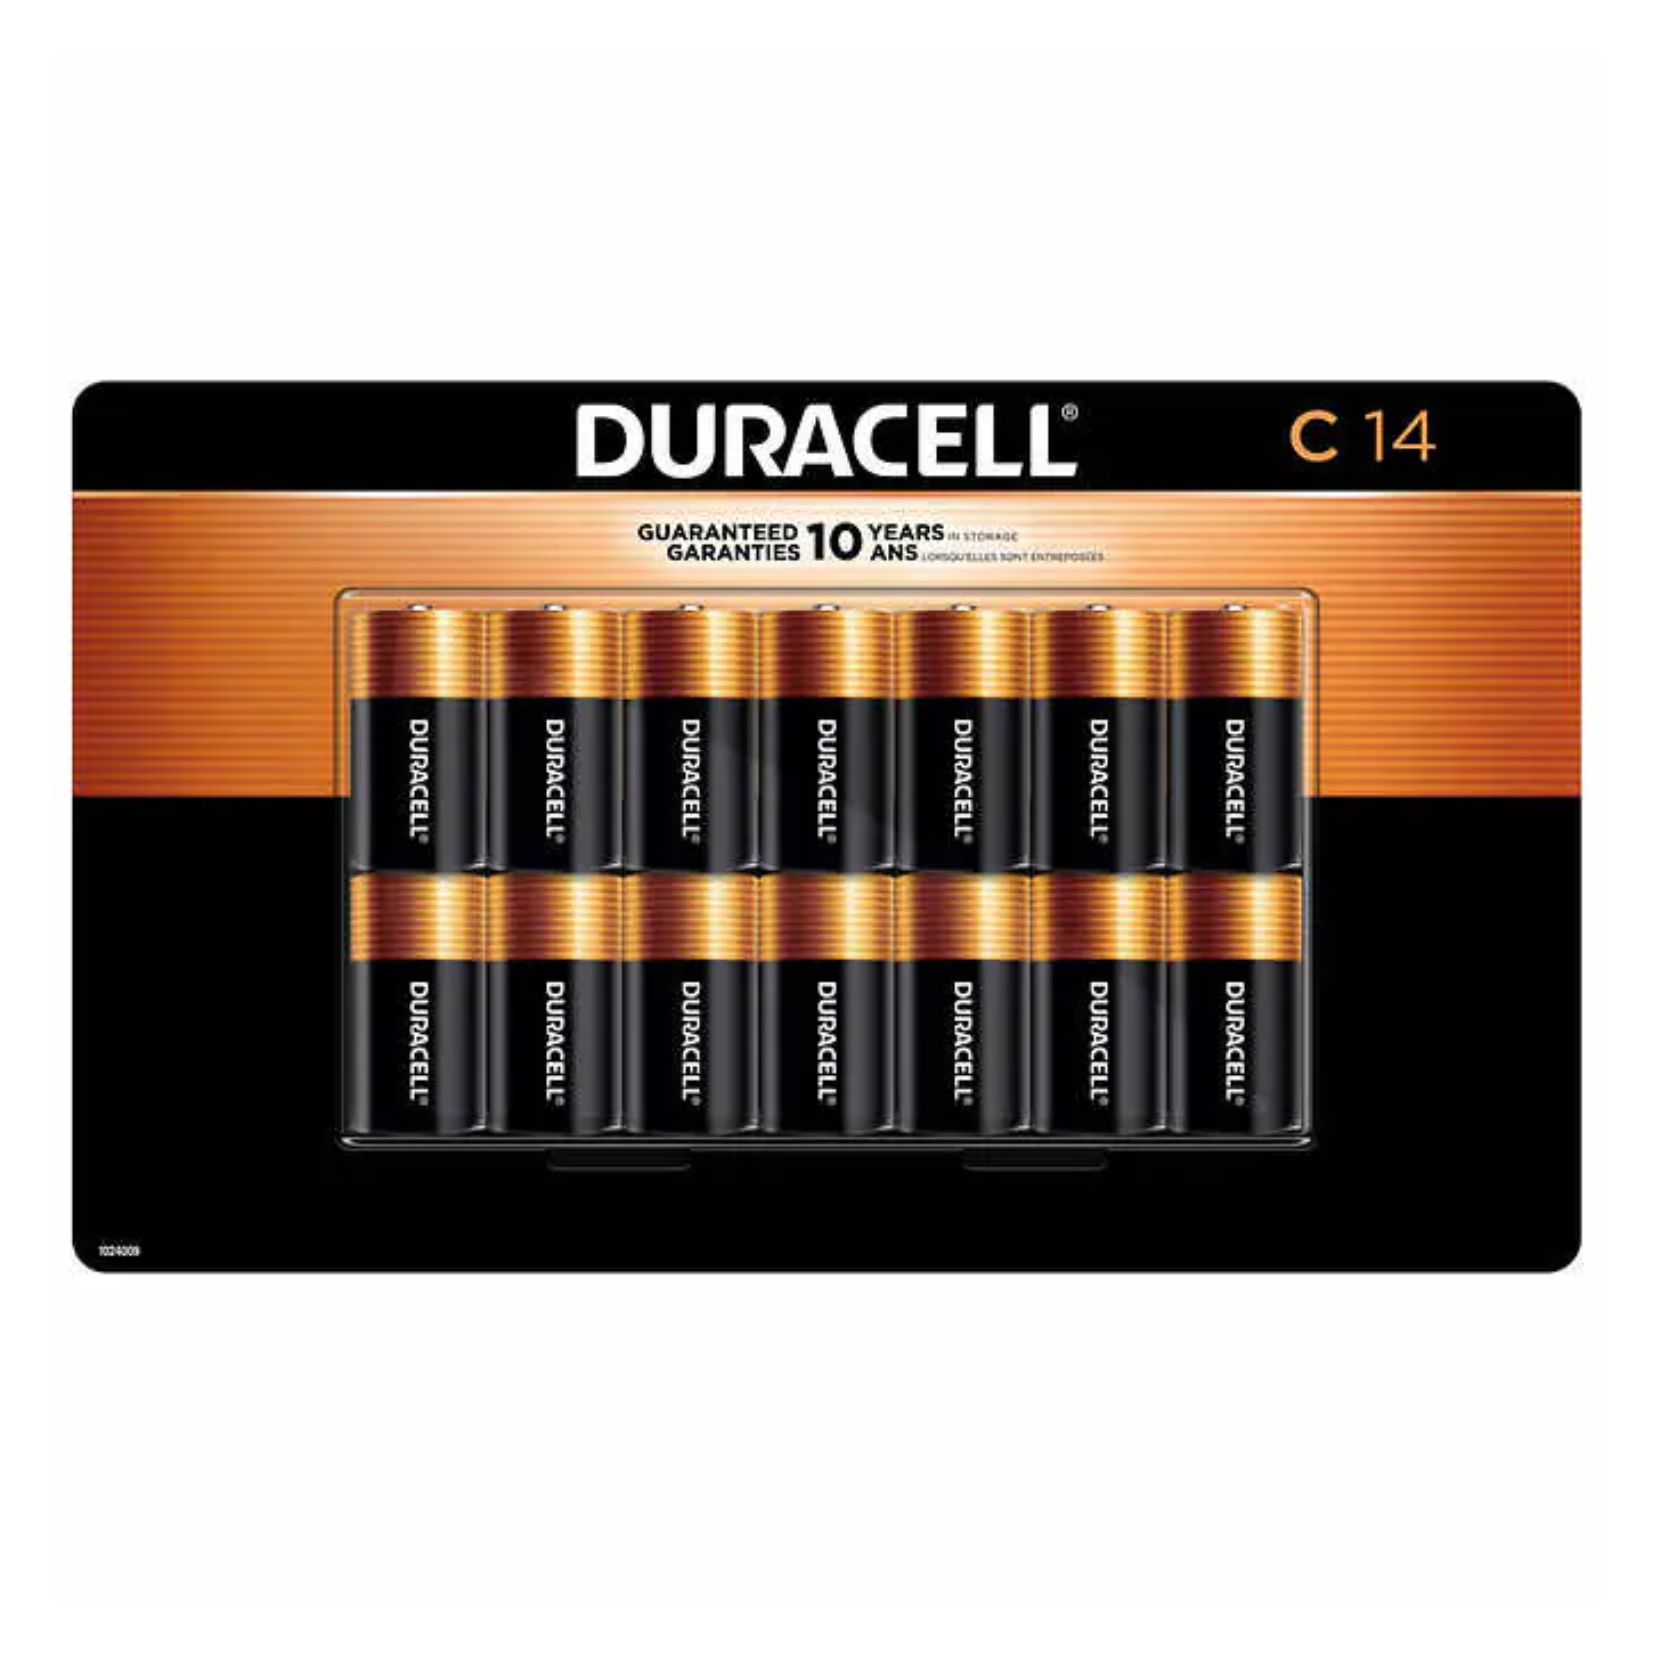 Duracell C Batteries 14ct